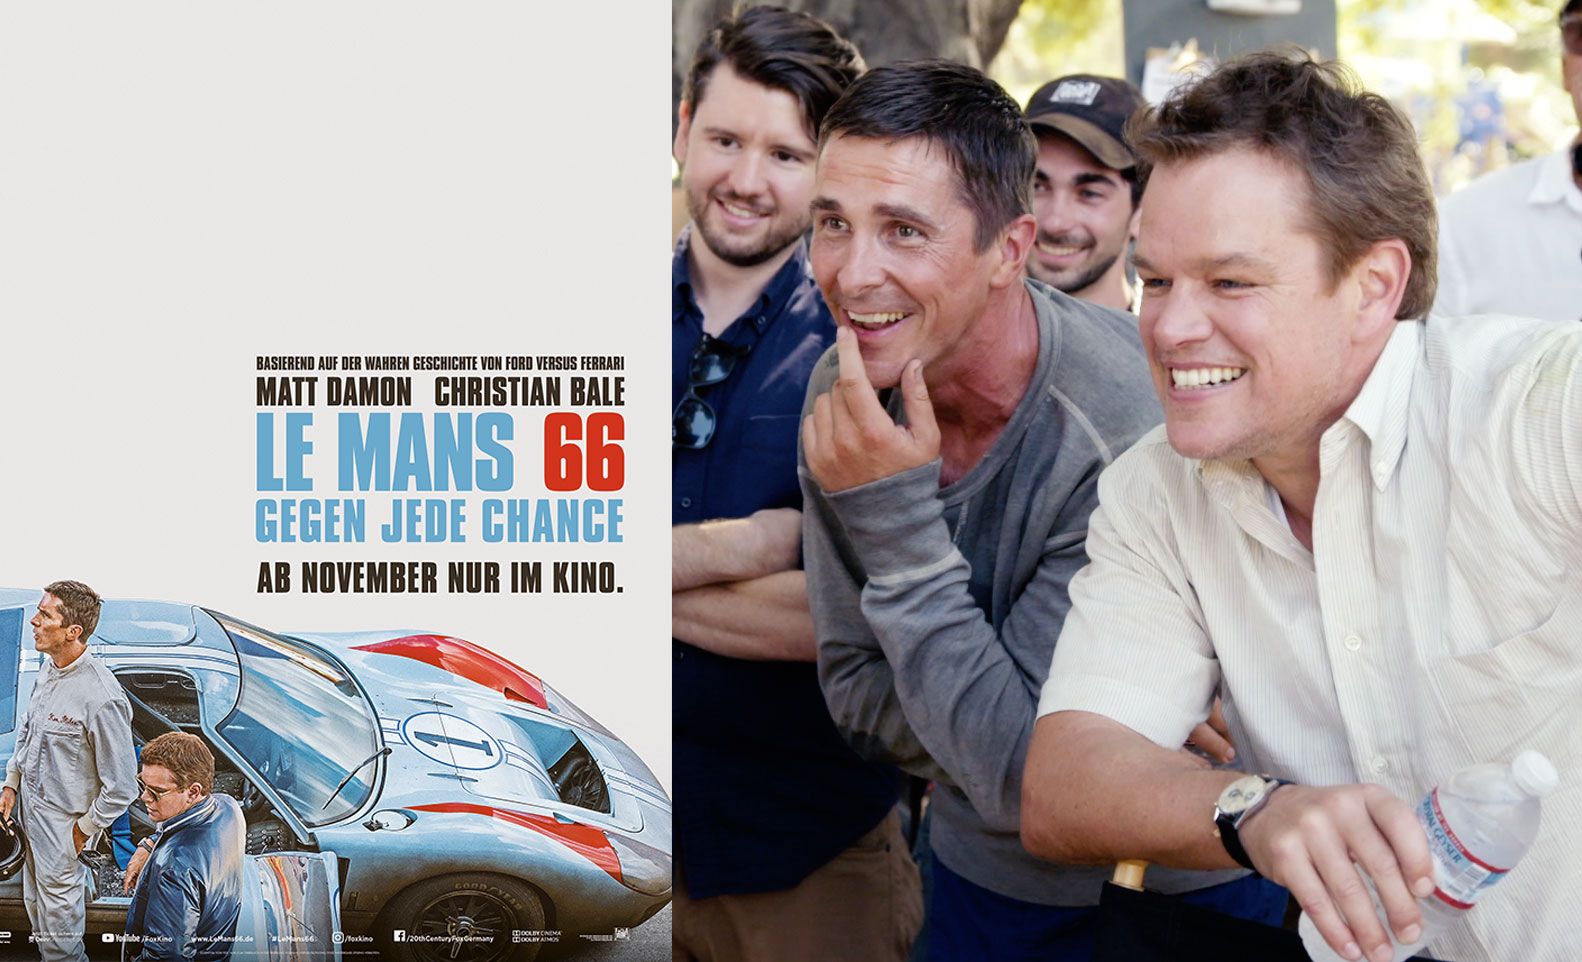 Le Mans 66 - Christian Bale and Matt Damon Interview